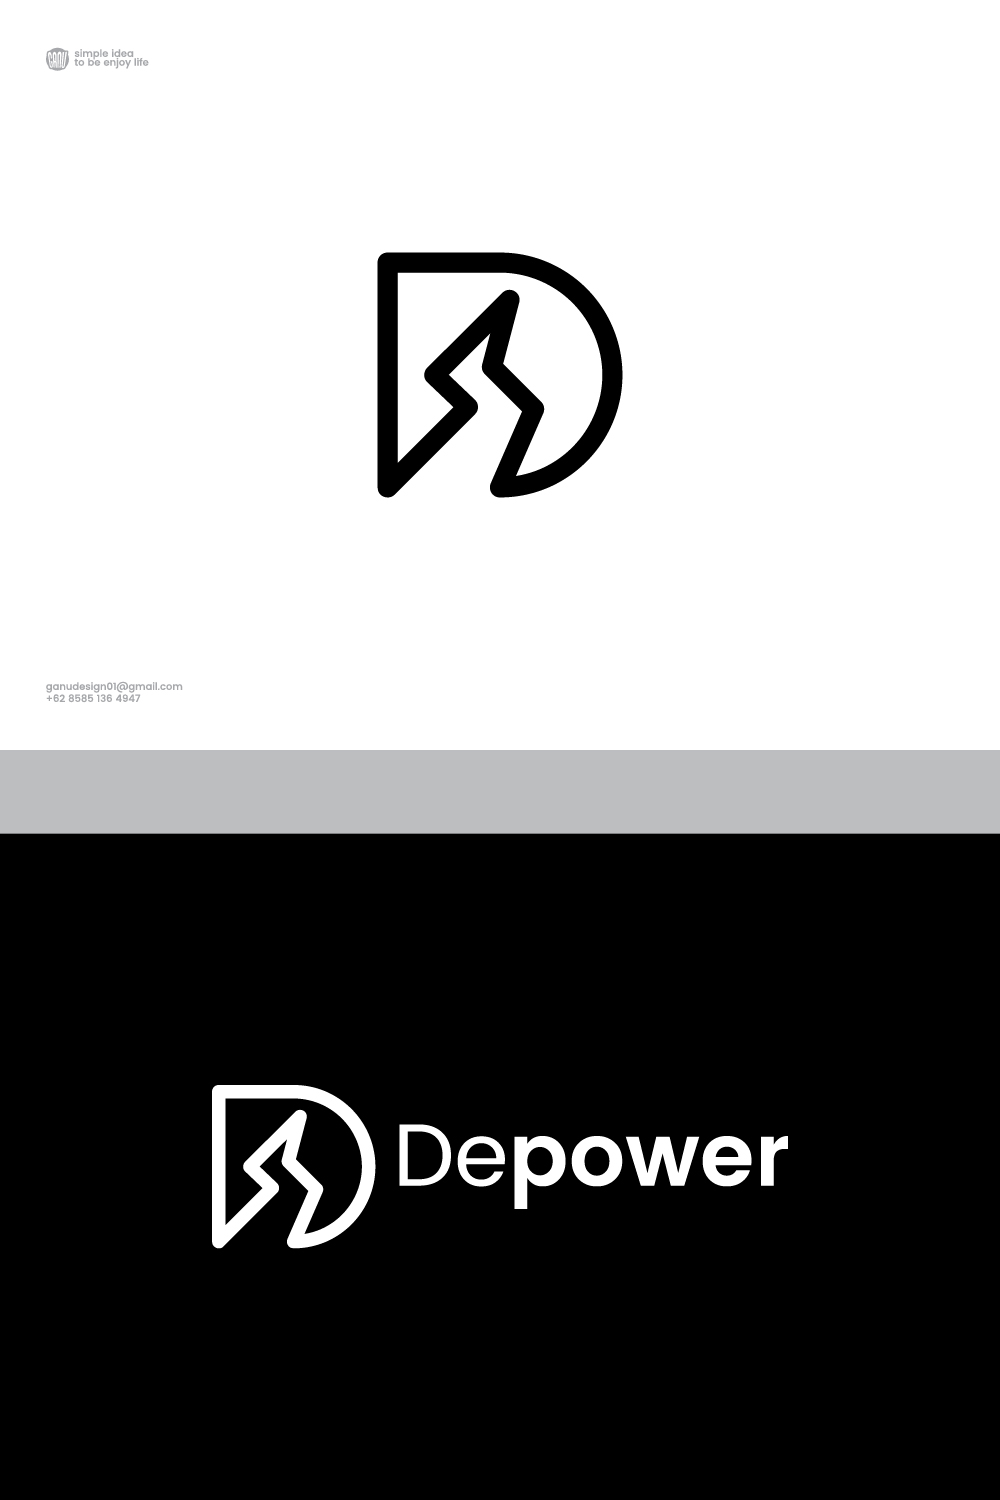 Letter D logo electric energy illustration Design pinterest preview image.